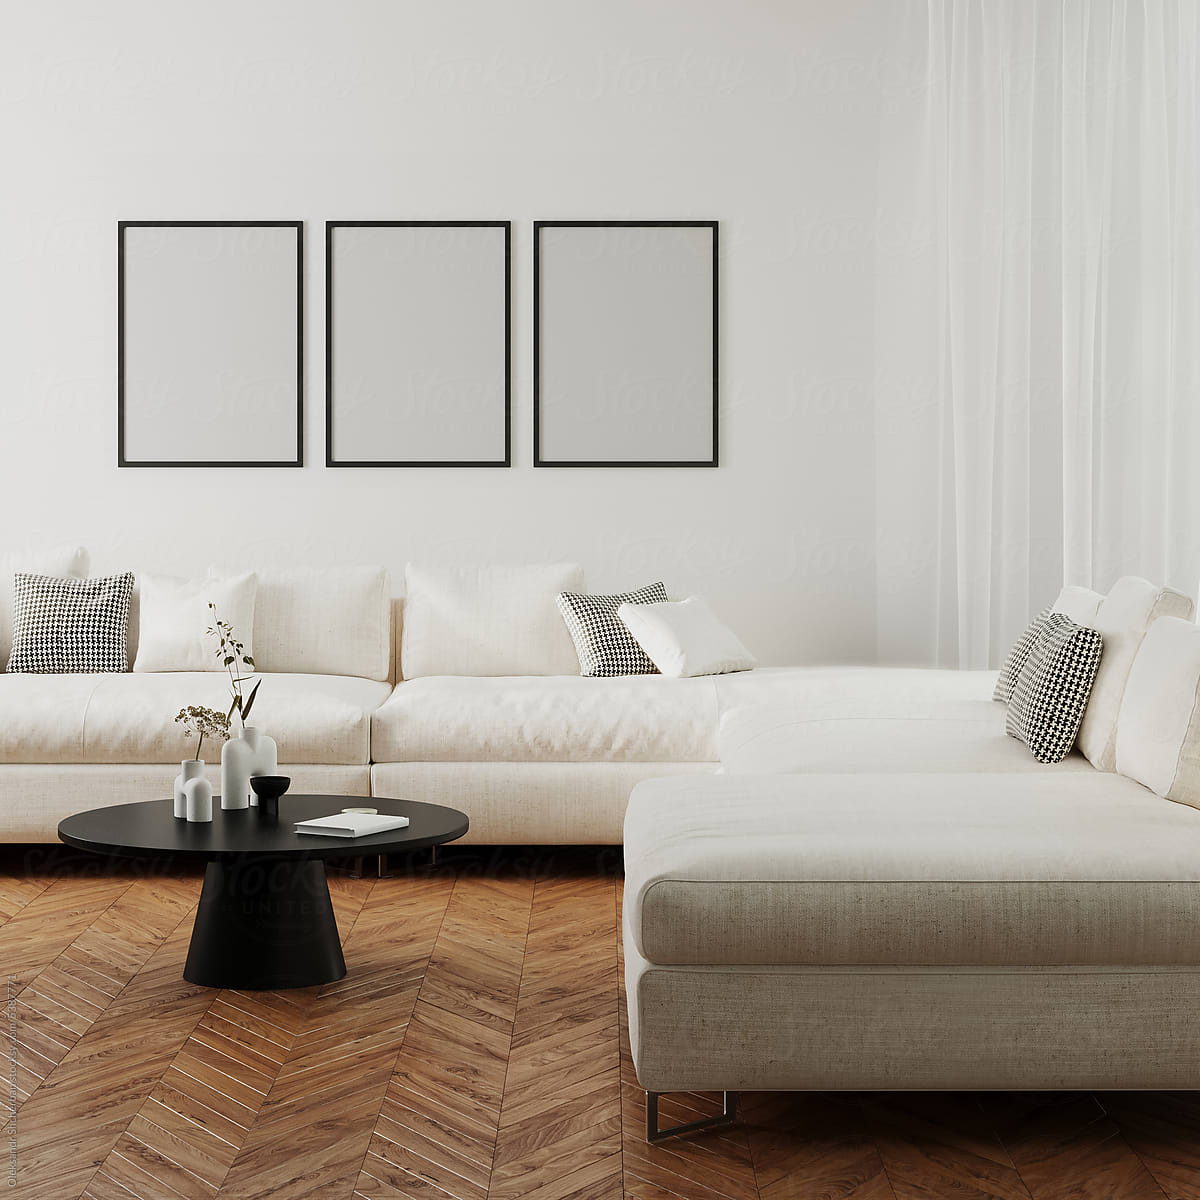 Three poster frames mock up in modern living room interior above sofa